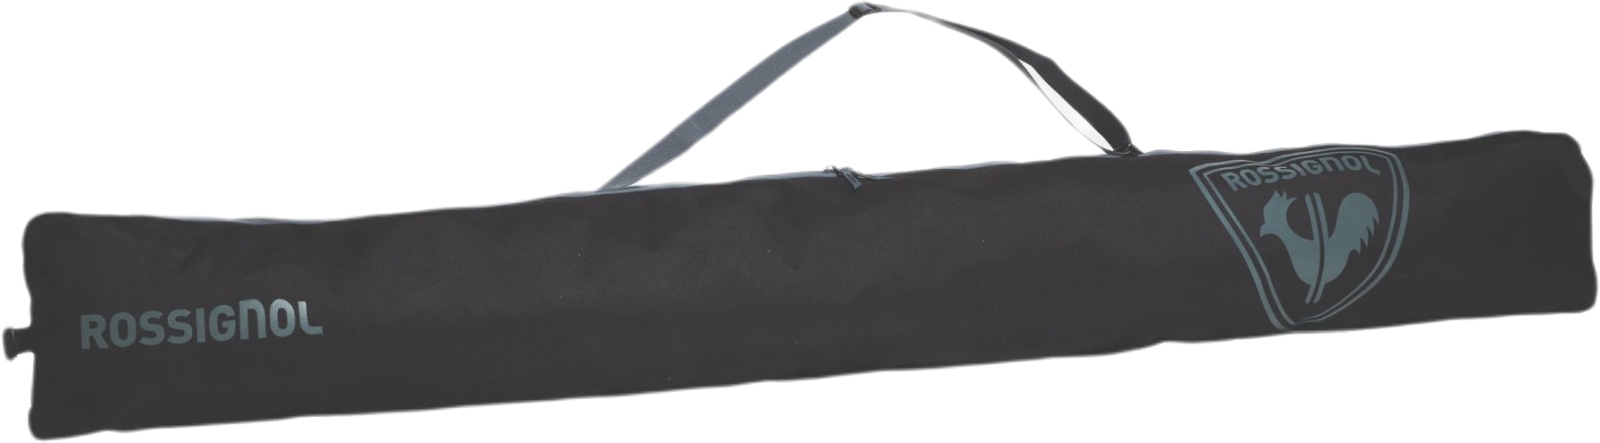 E-shop Rossignol Tactic Ski Bag Extendable Long 160-210 cm 160-210 cm